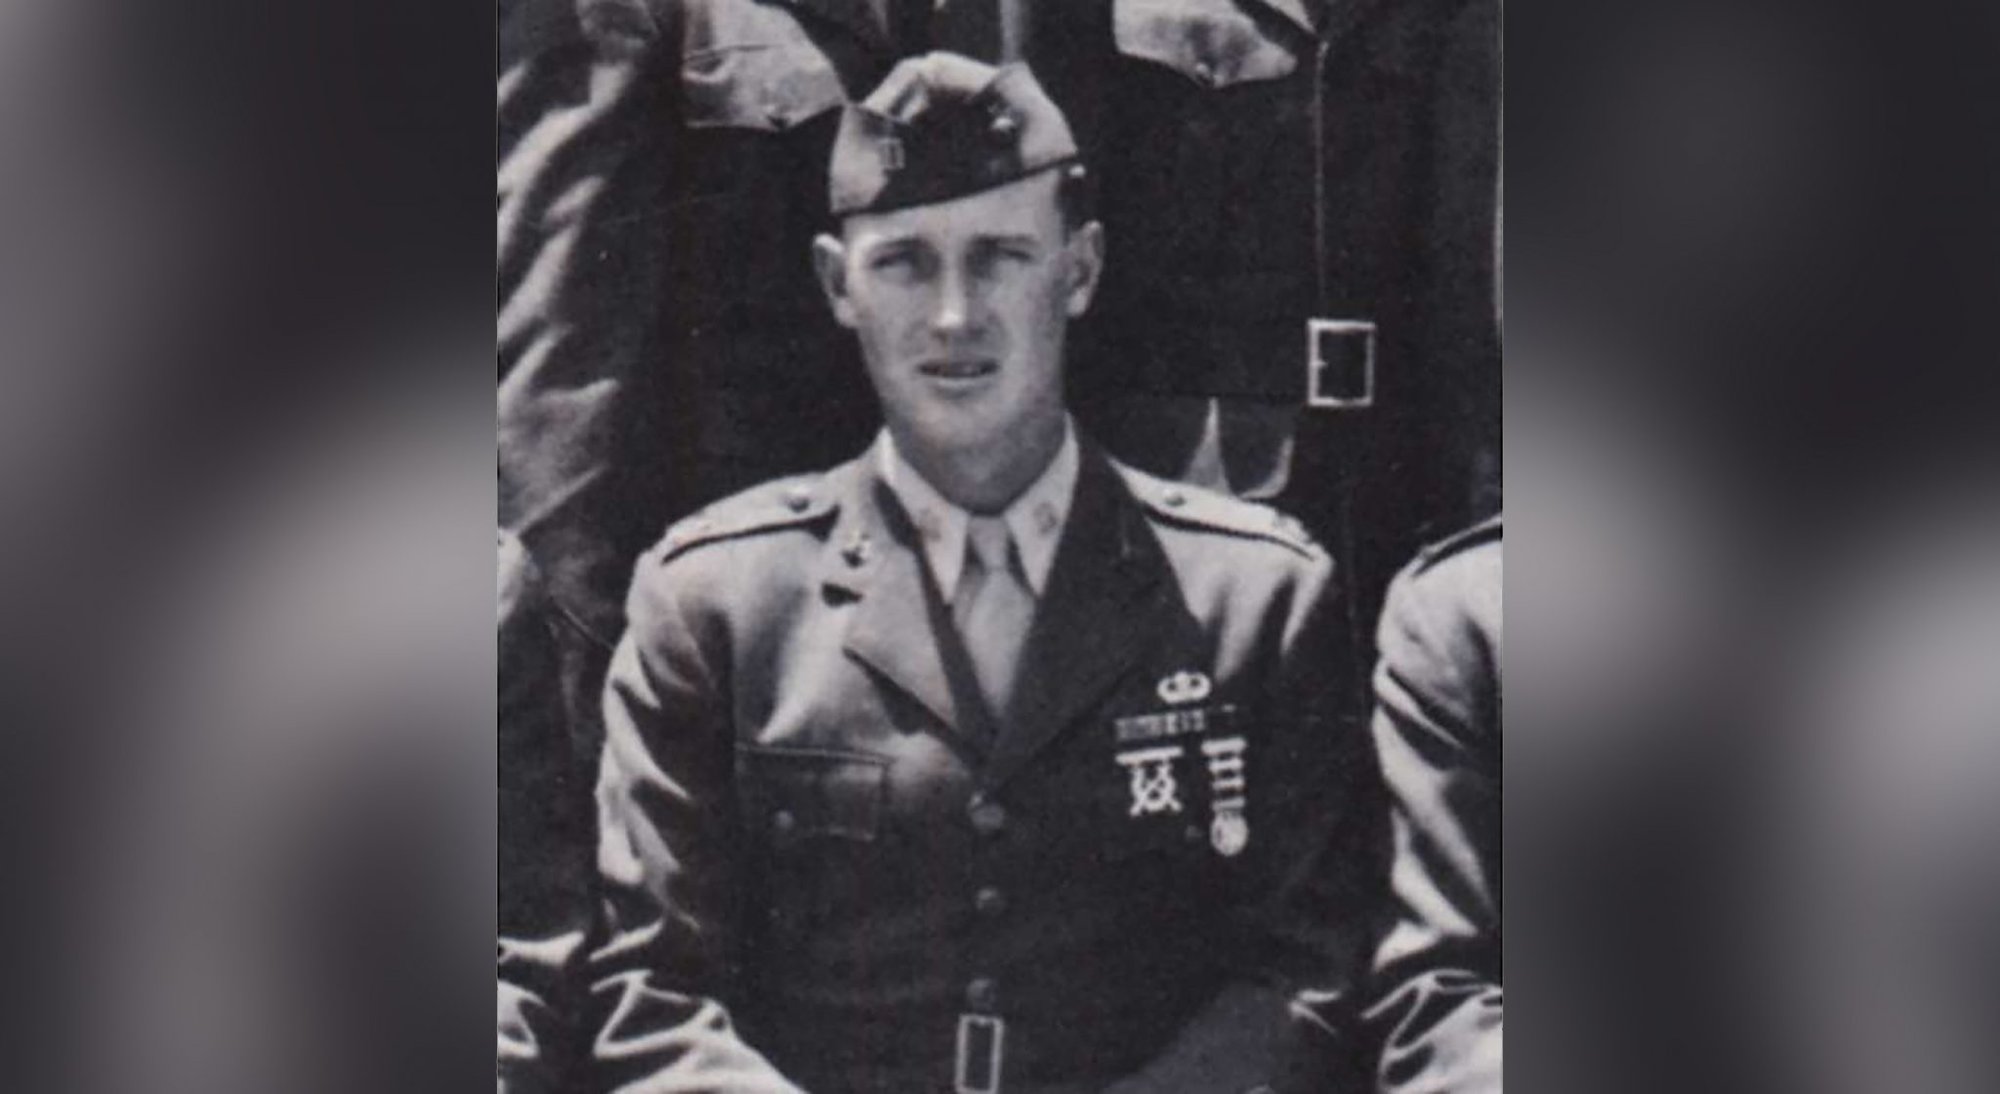 Capt. Dave E. Severance, Iwo Jima veteran